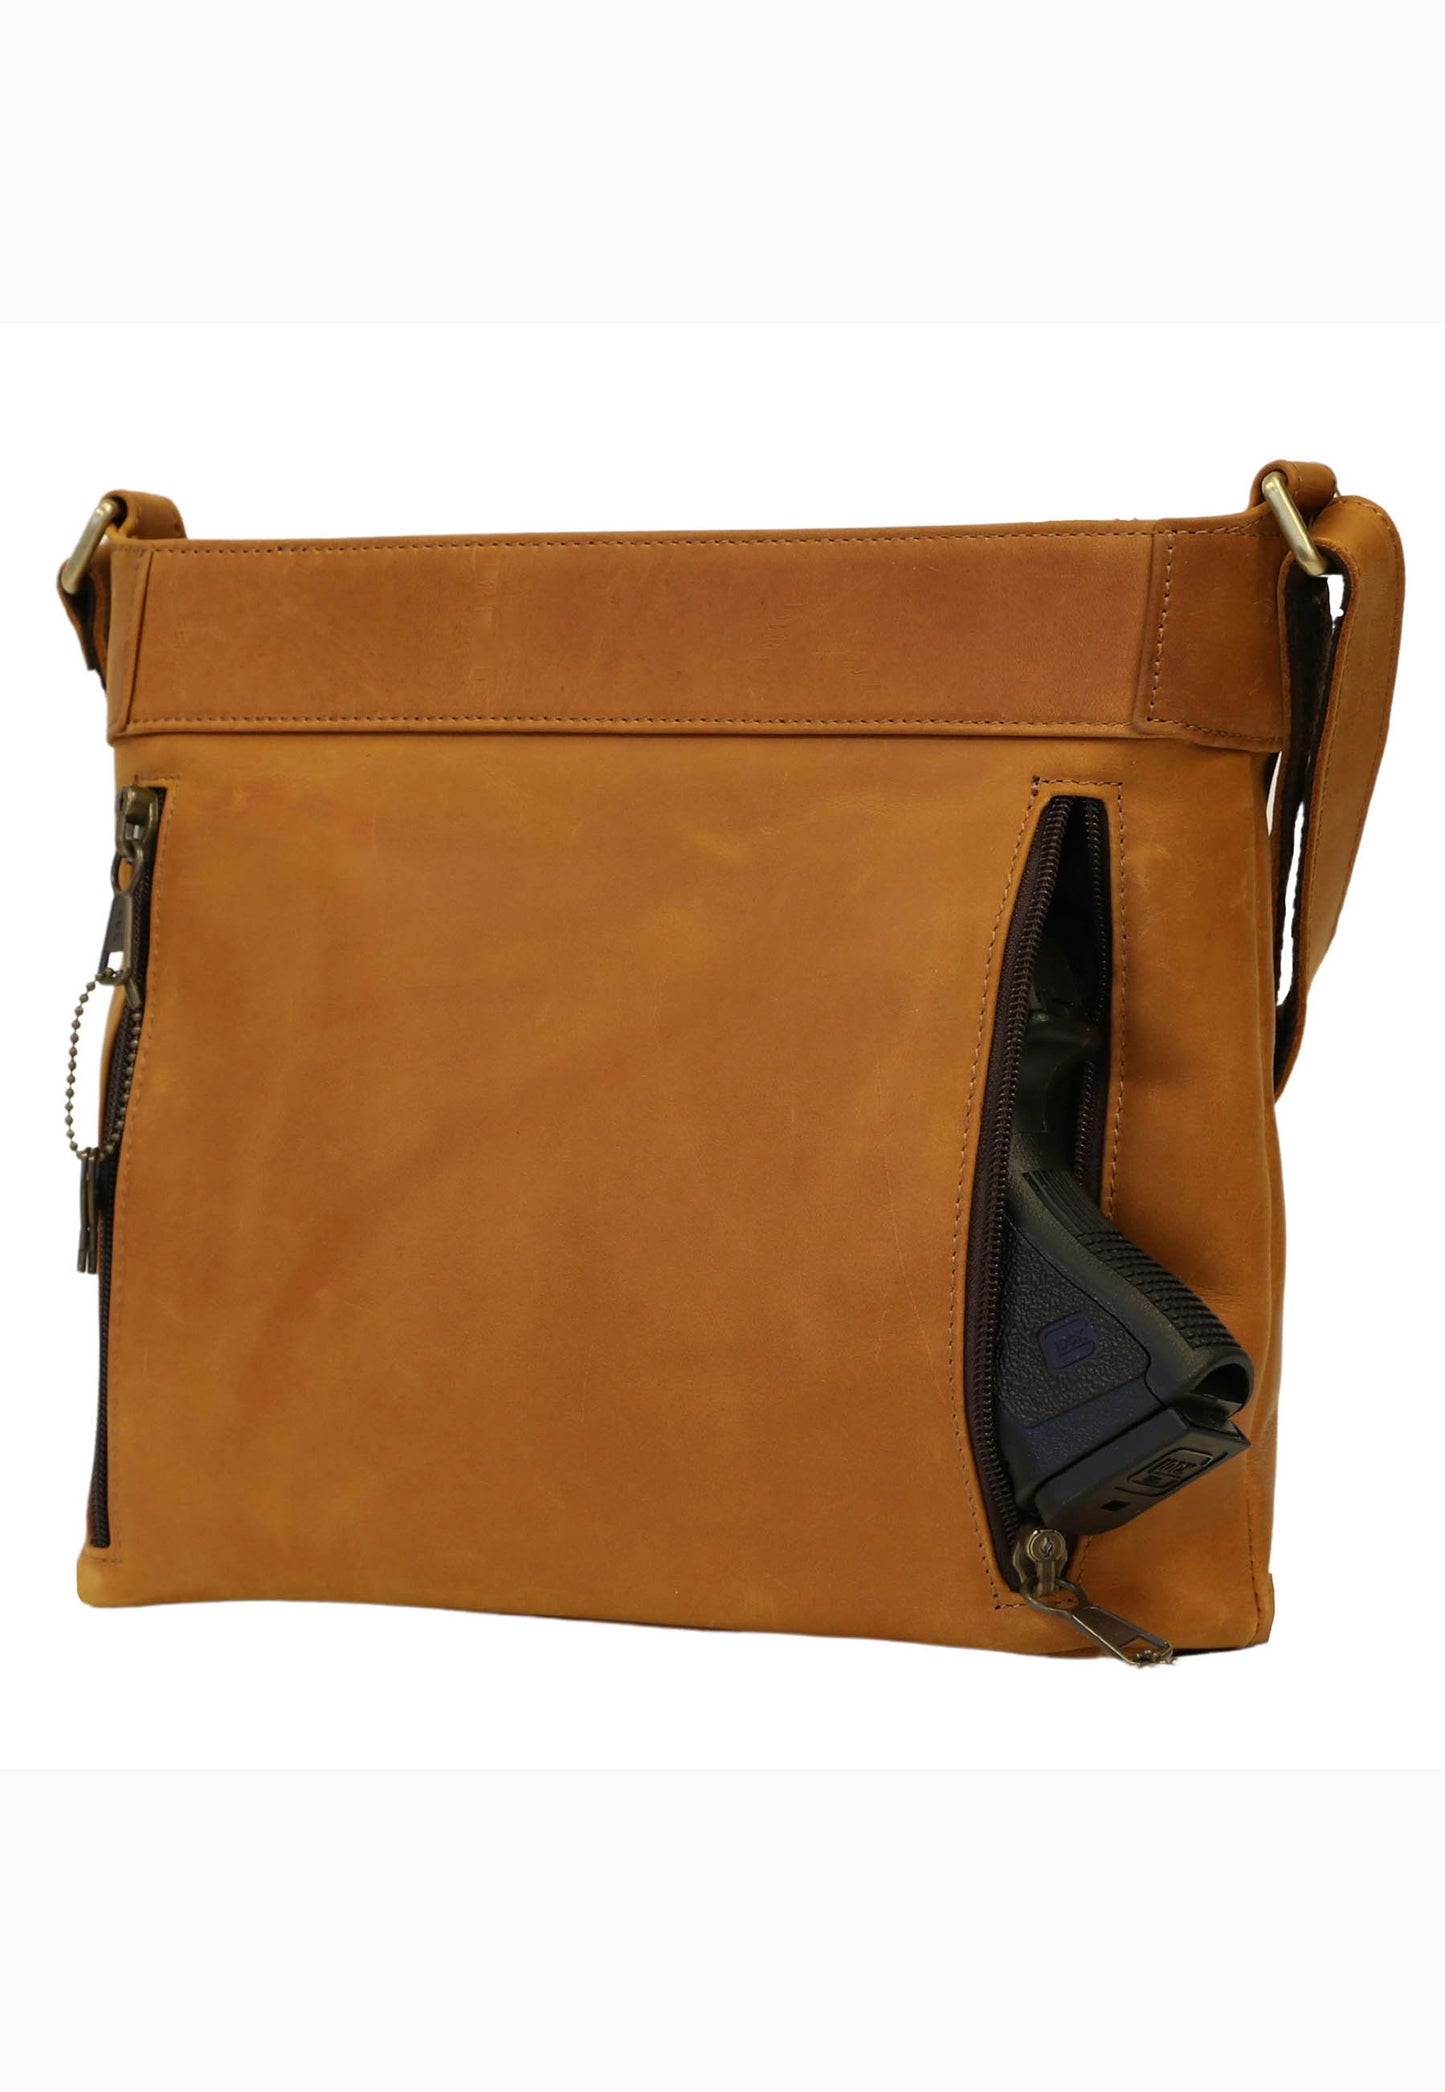 gun pocket shown in conceal carry bag